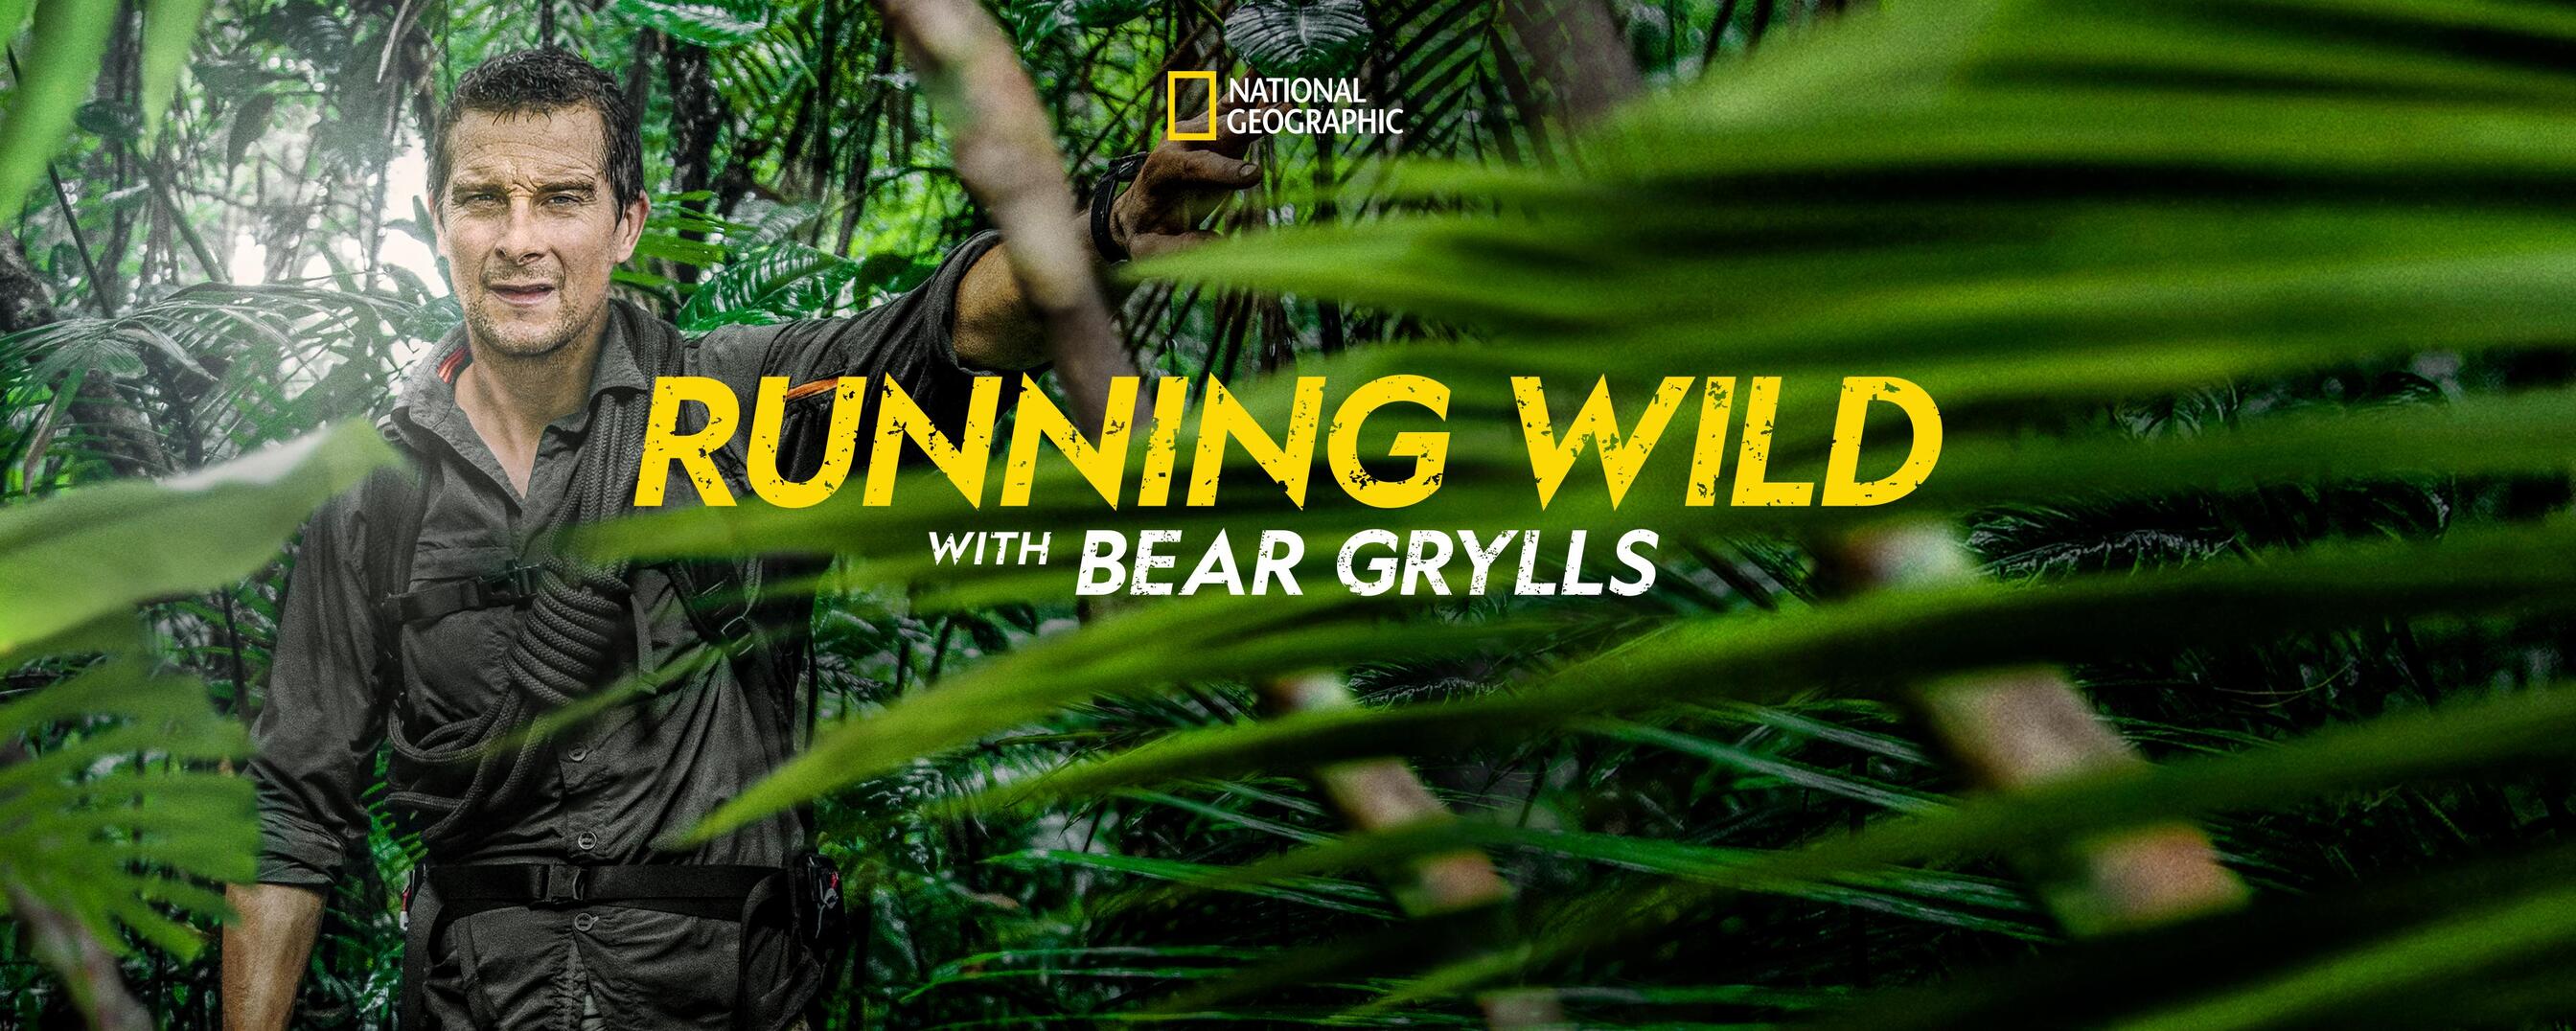 Watch Running Wild with Bear Grylls TV Show - Streaming Online